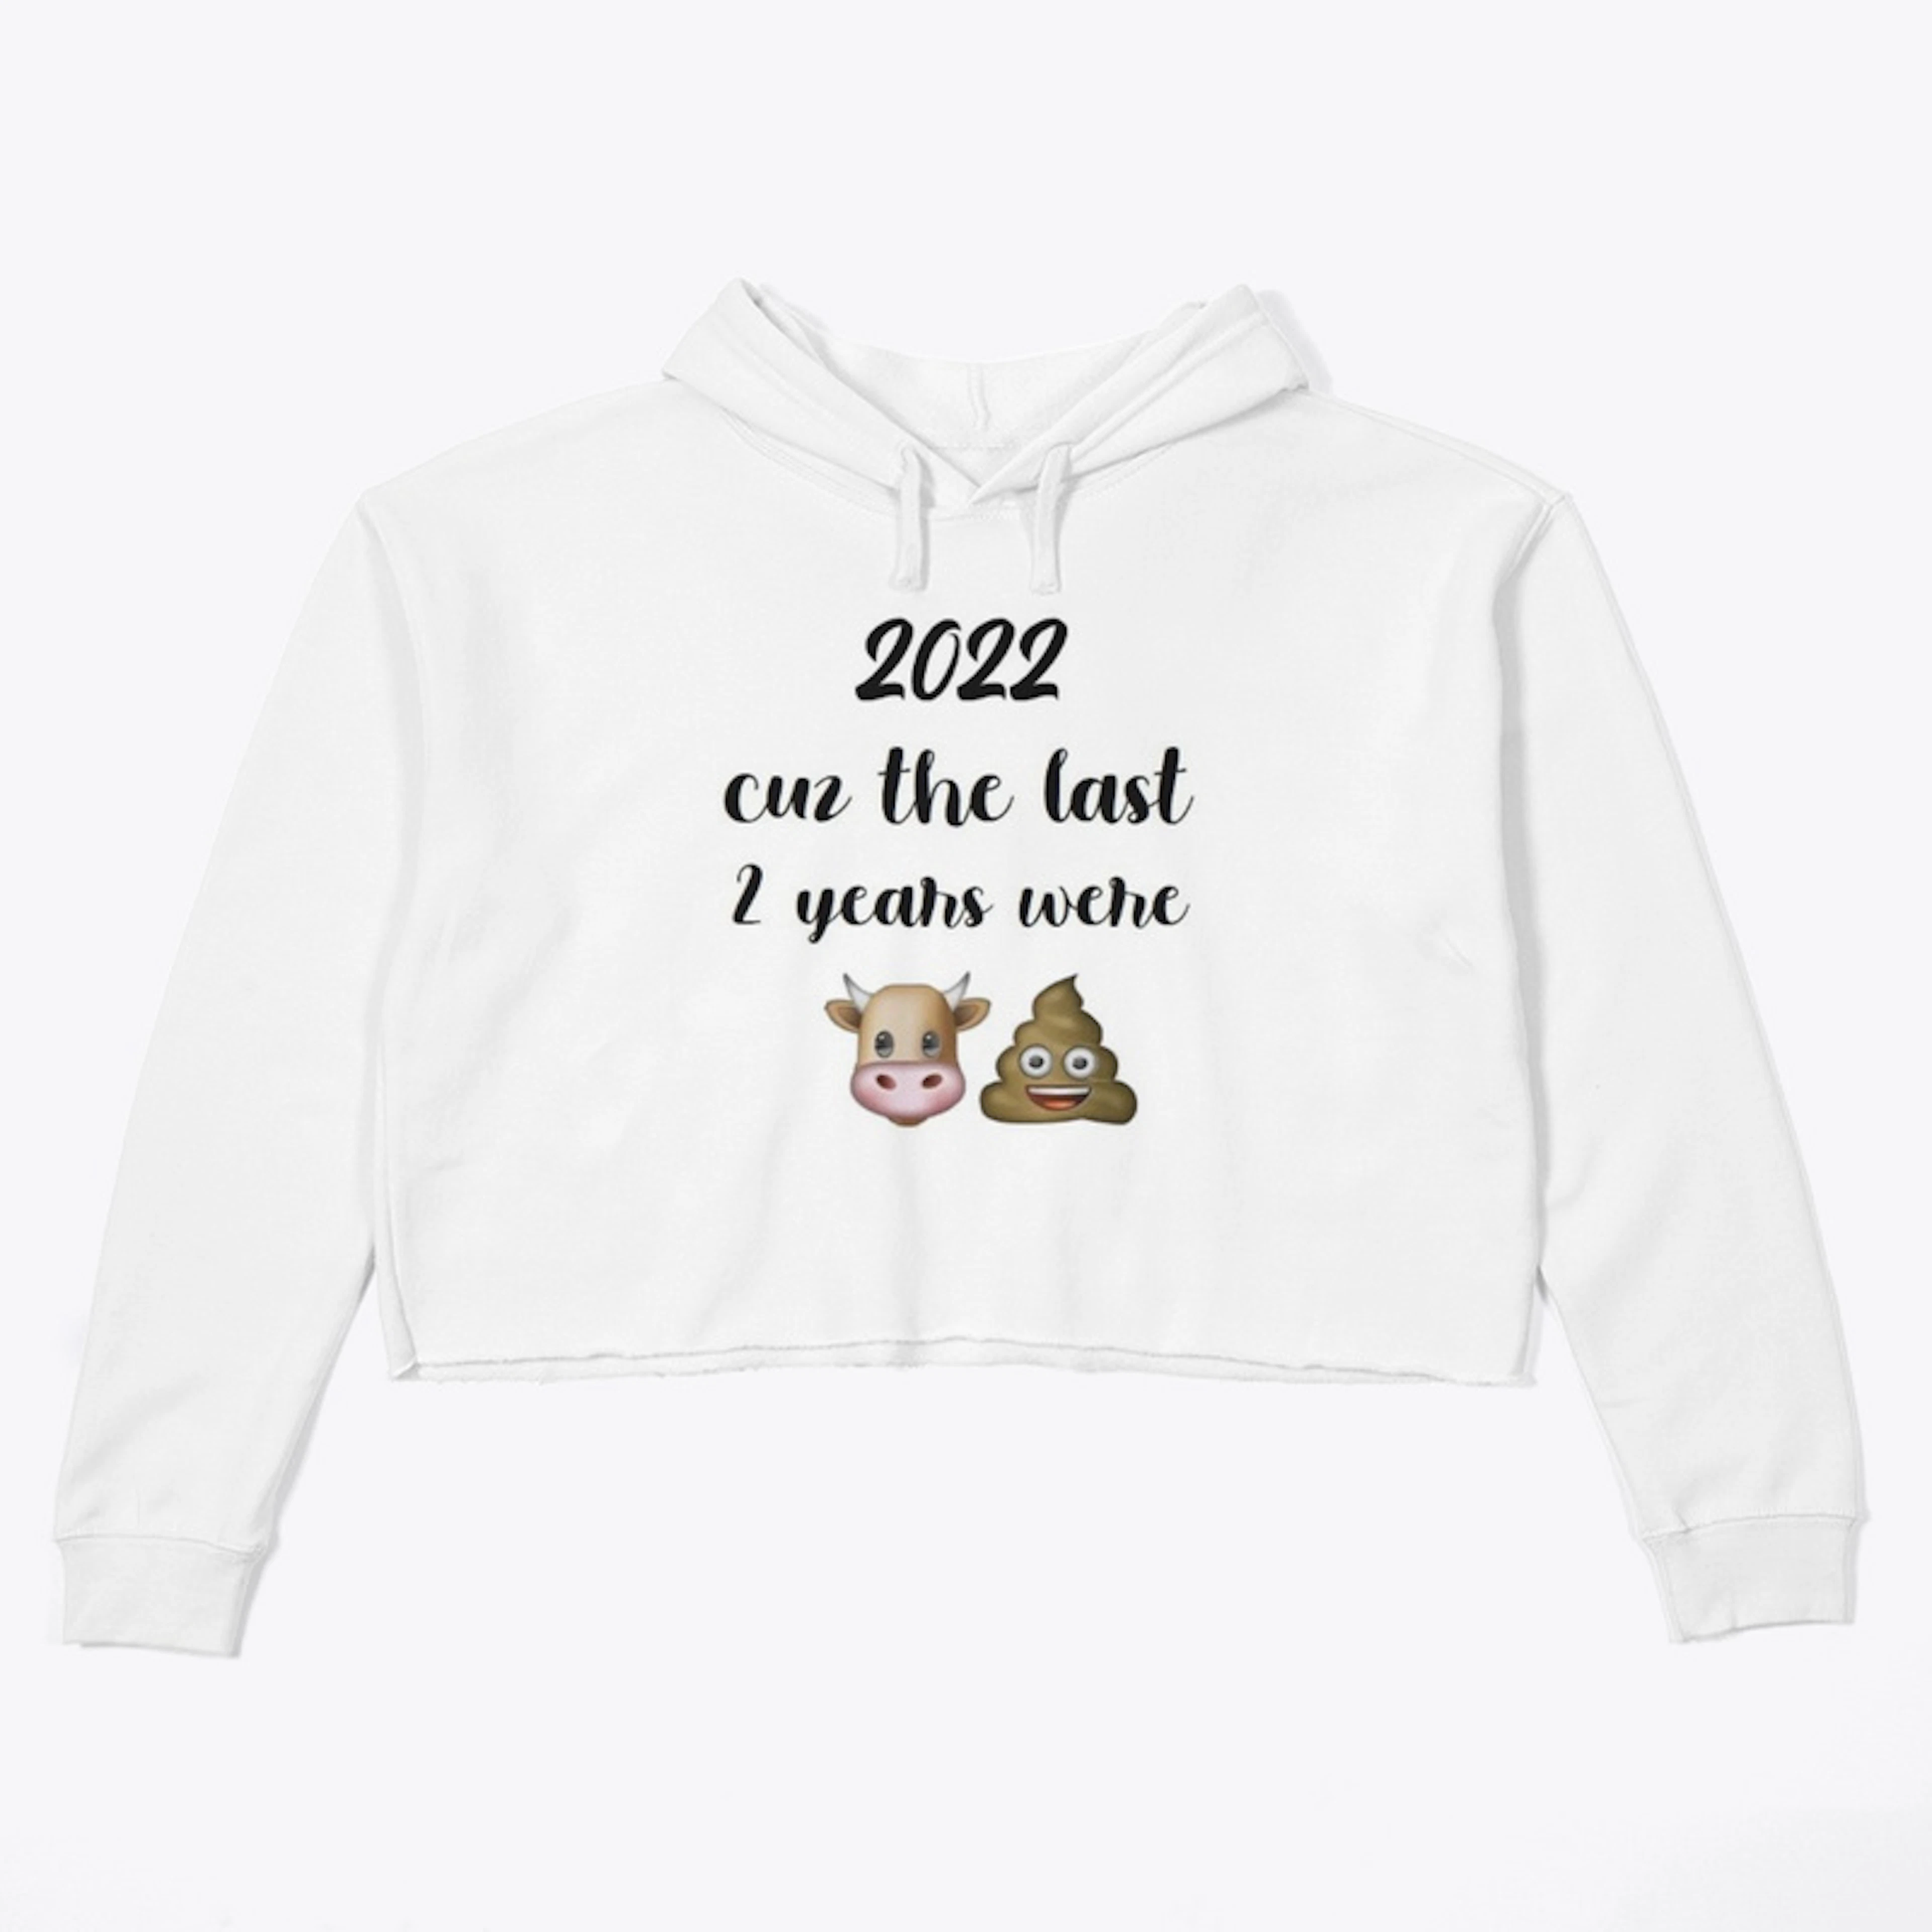 Bring On 2022!